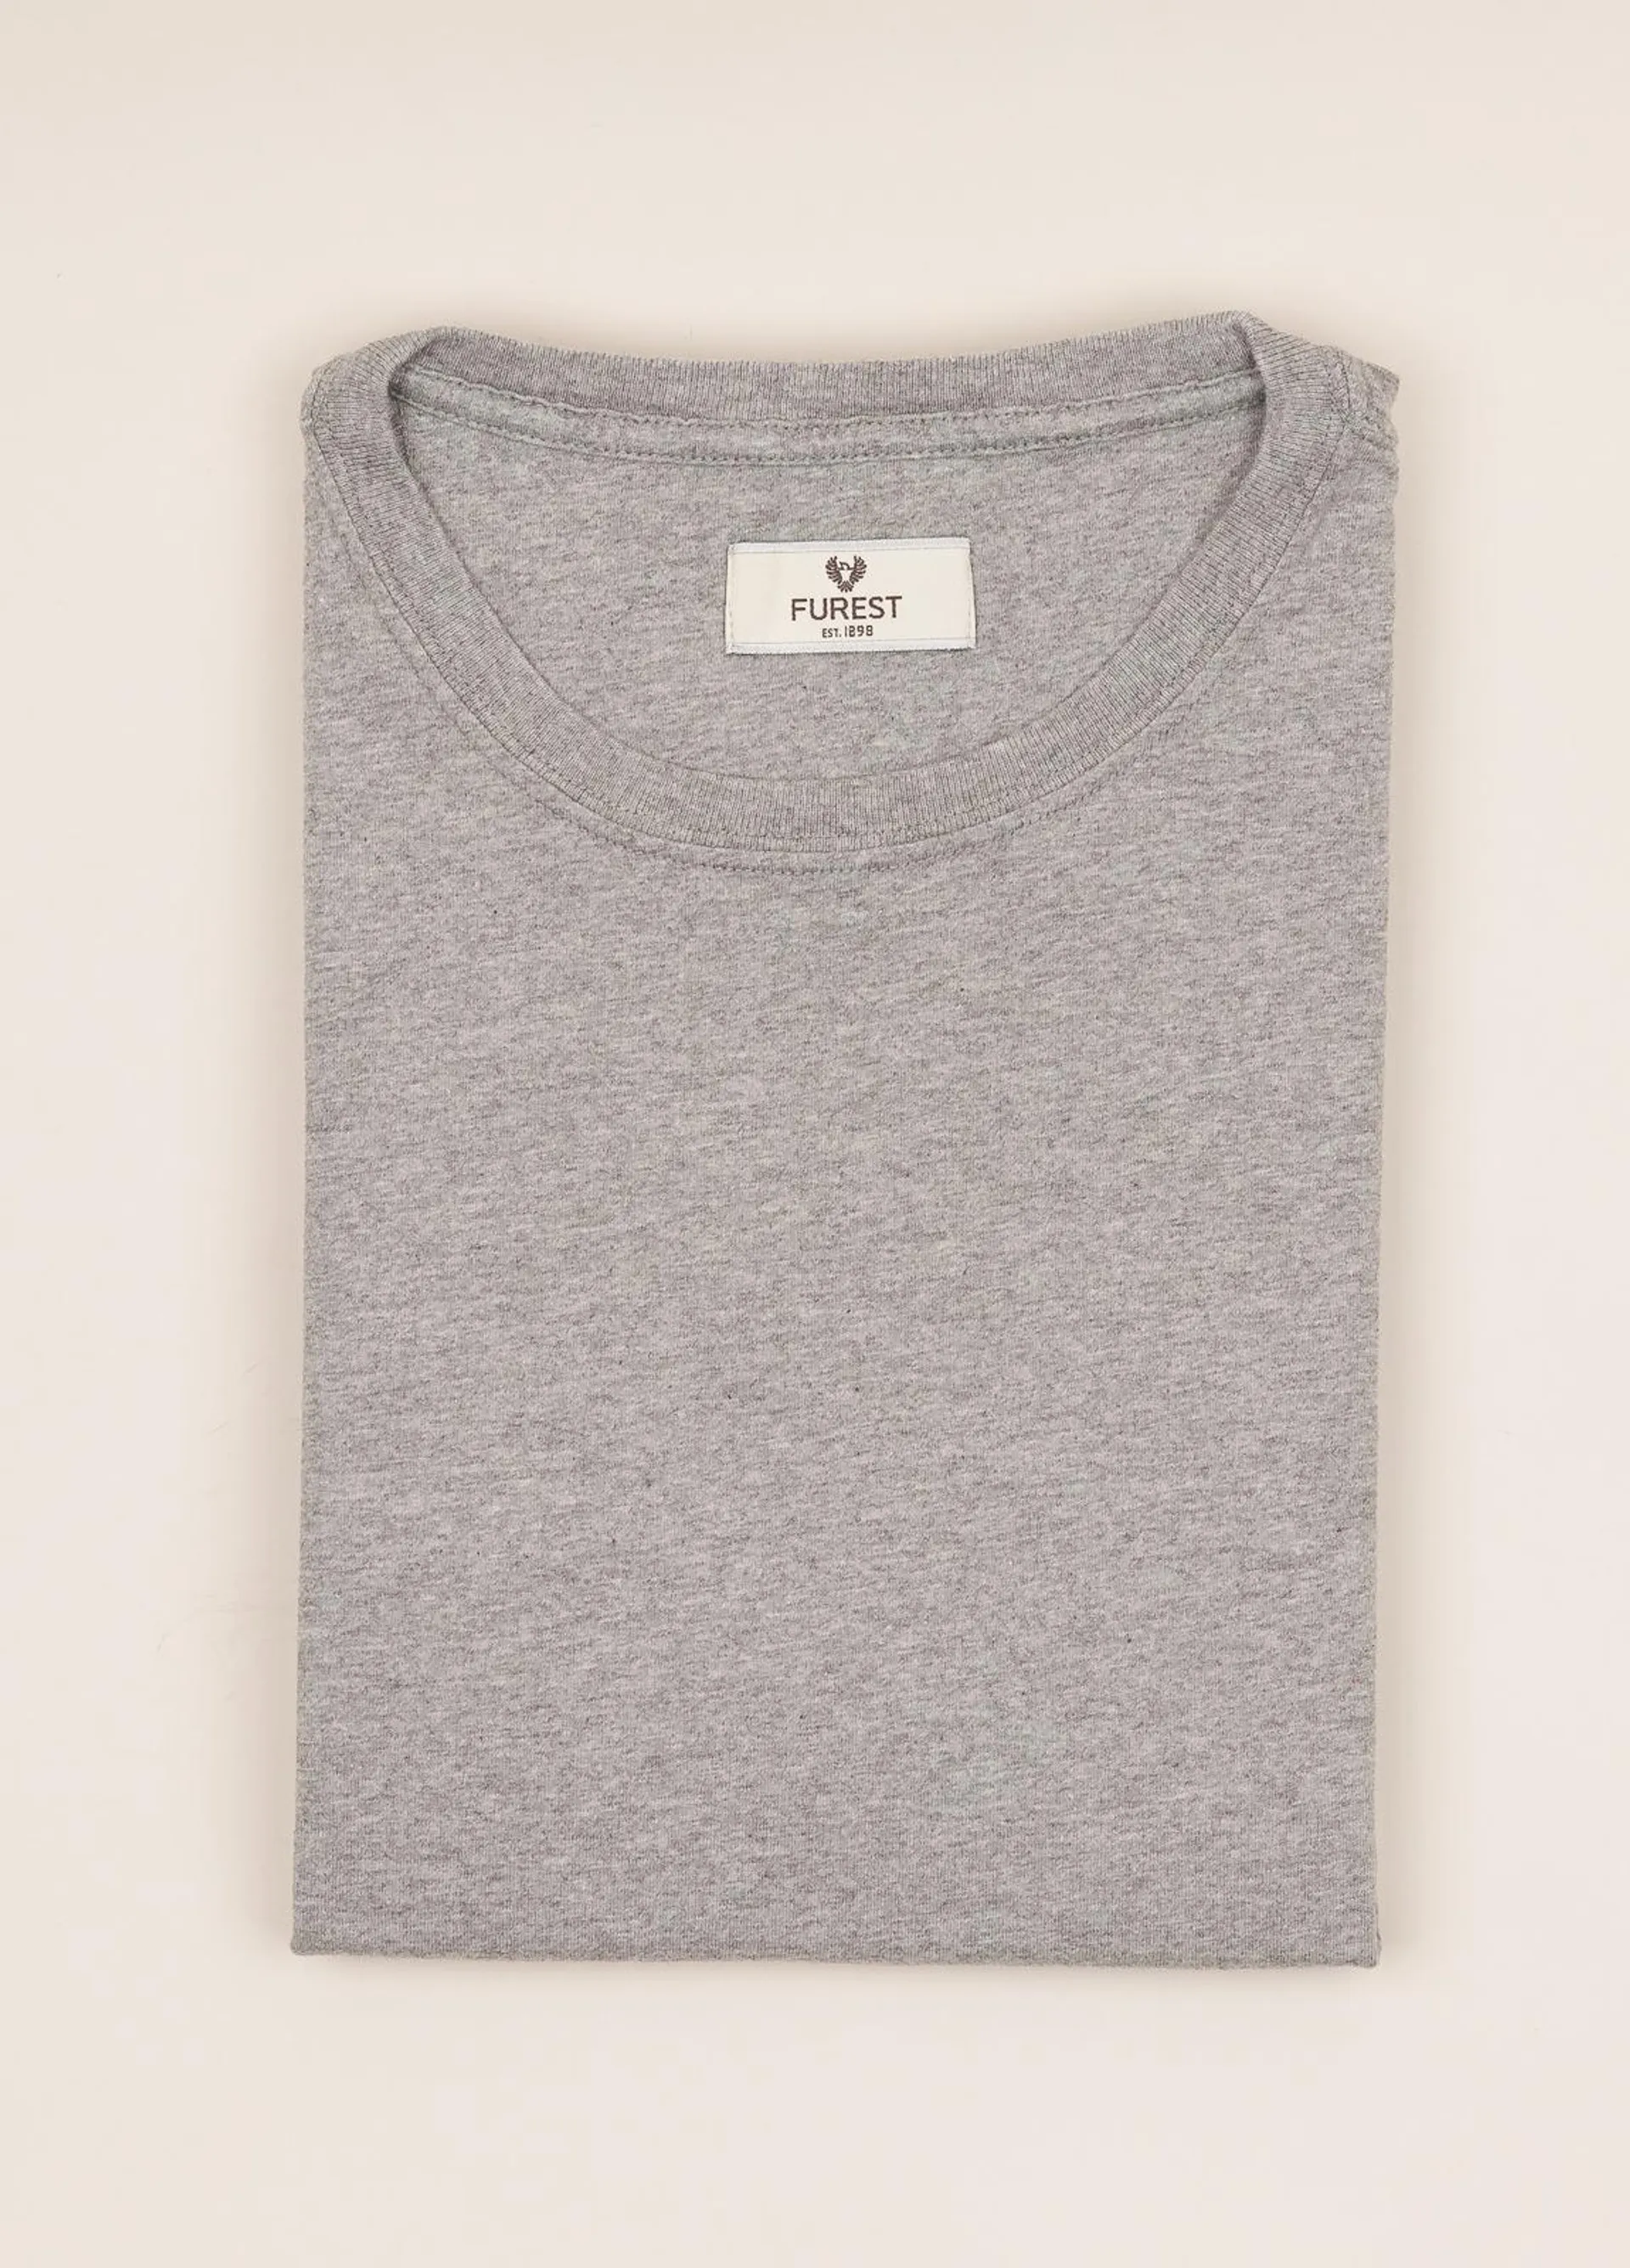 Camiseta manga corta FUREST COLECCIÓN gris